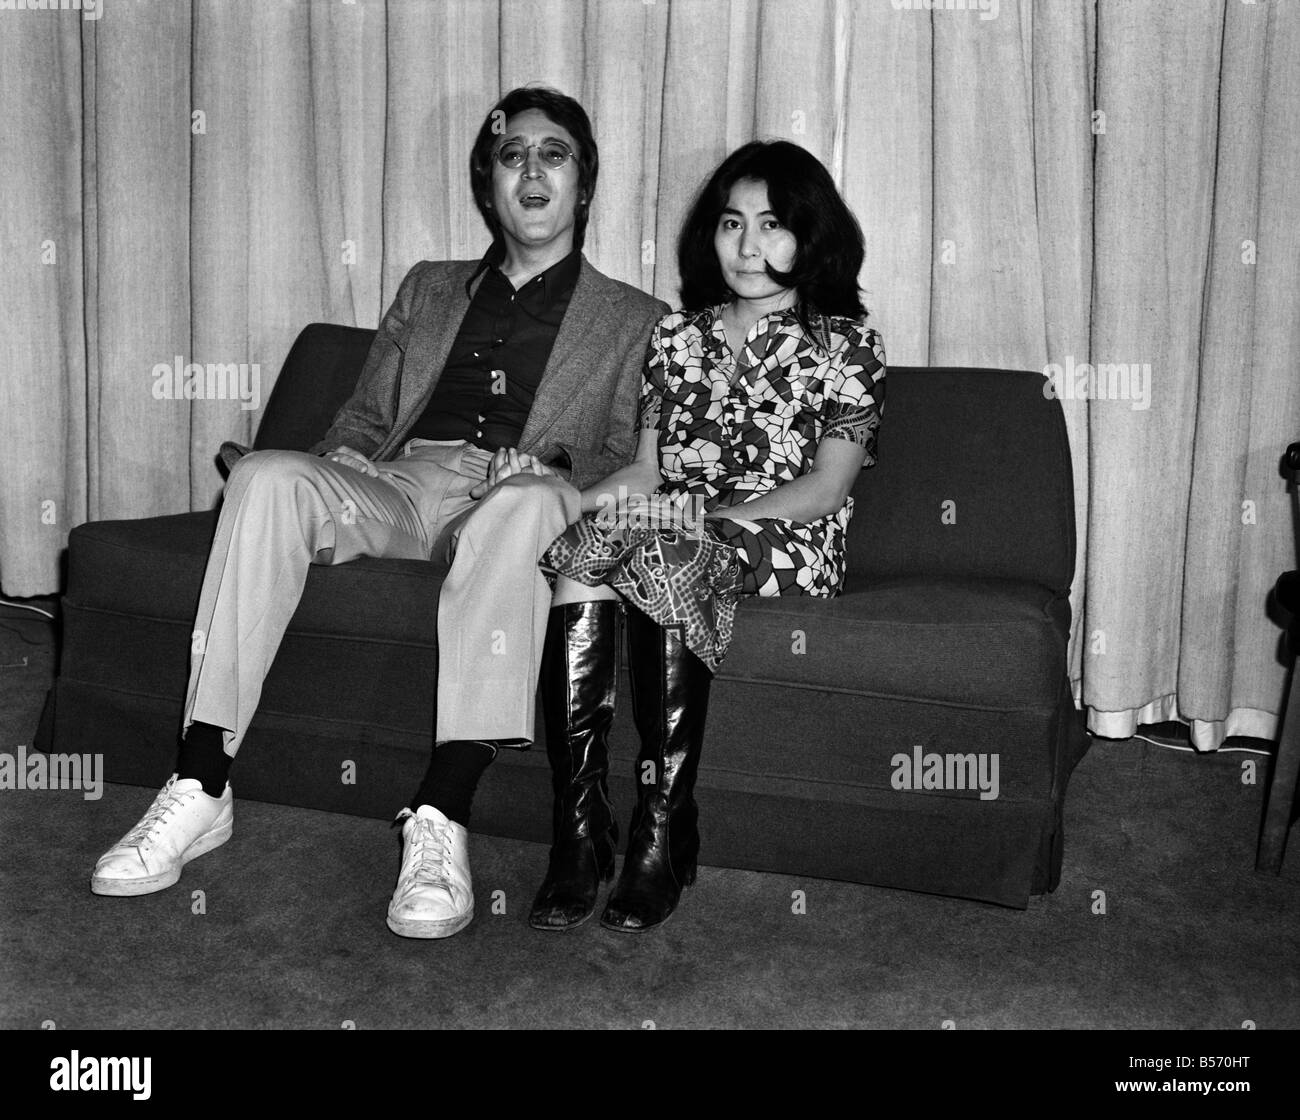 John lennon 1971 Black and White Stock Photos & Images - Alamy